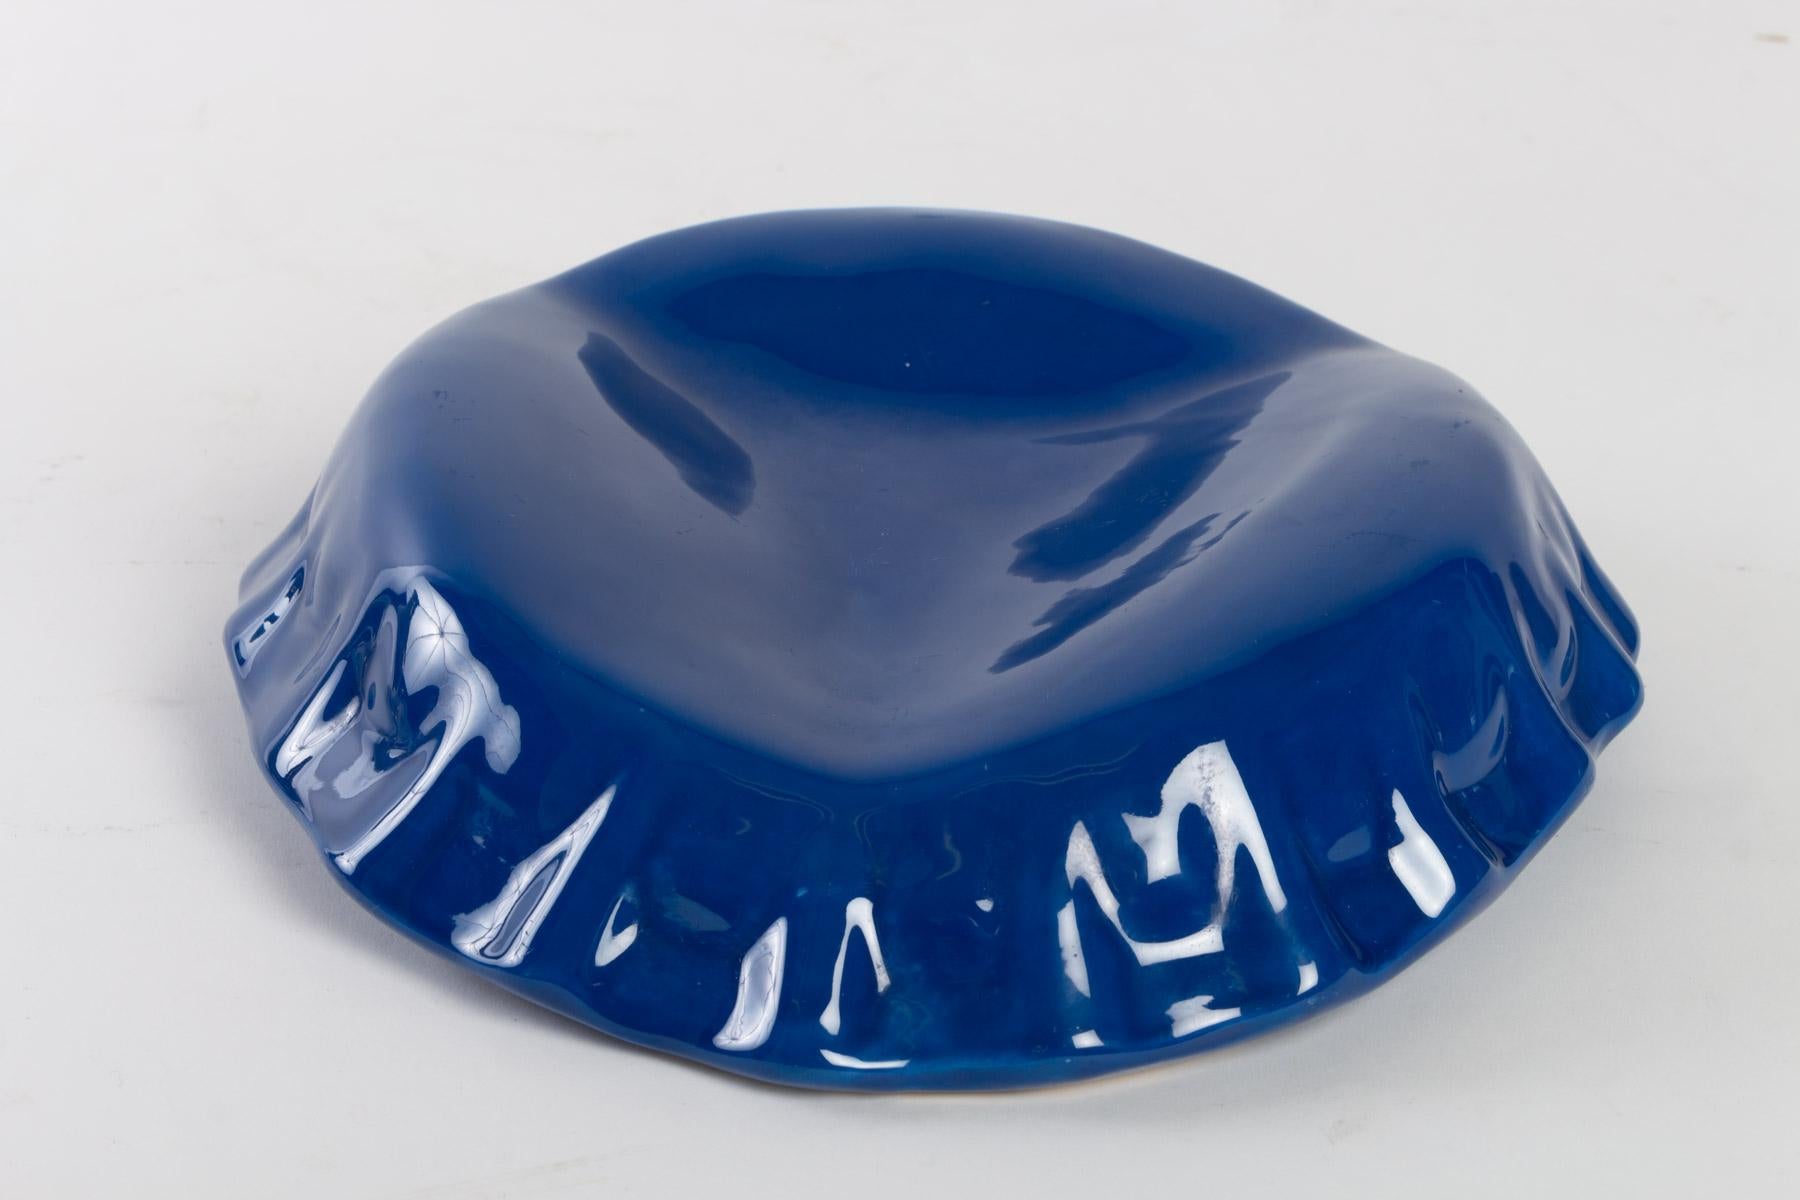 Vide-poche in the format of a can cap, blue enameled porcelain, 20th century.
Measures: D 27 cm, H 7 cm.